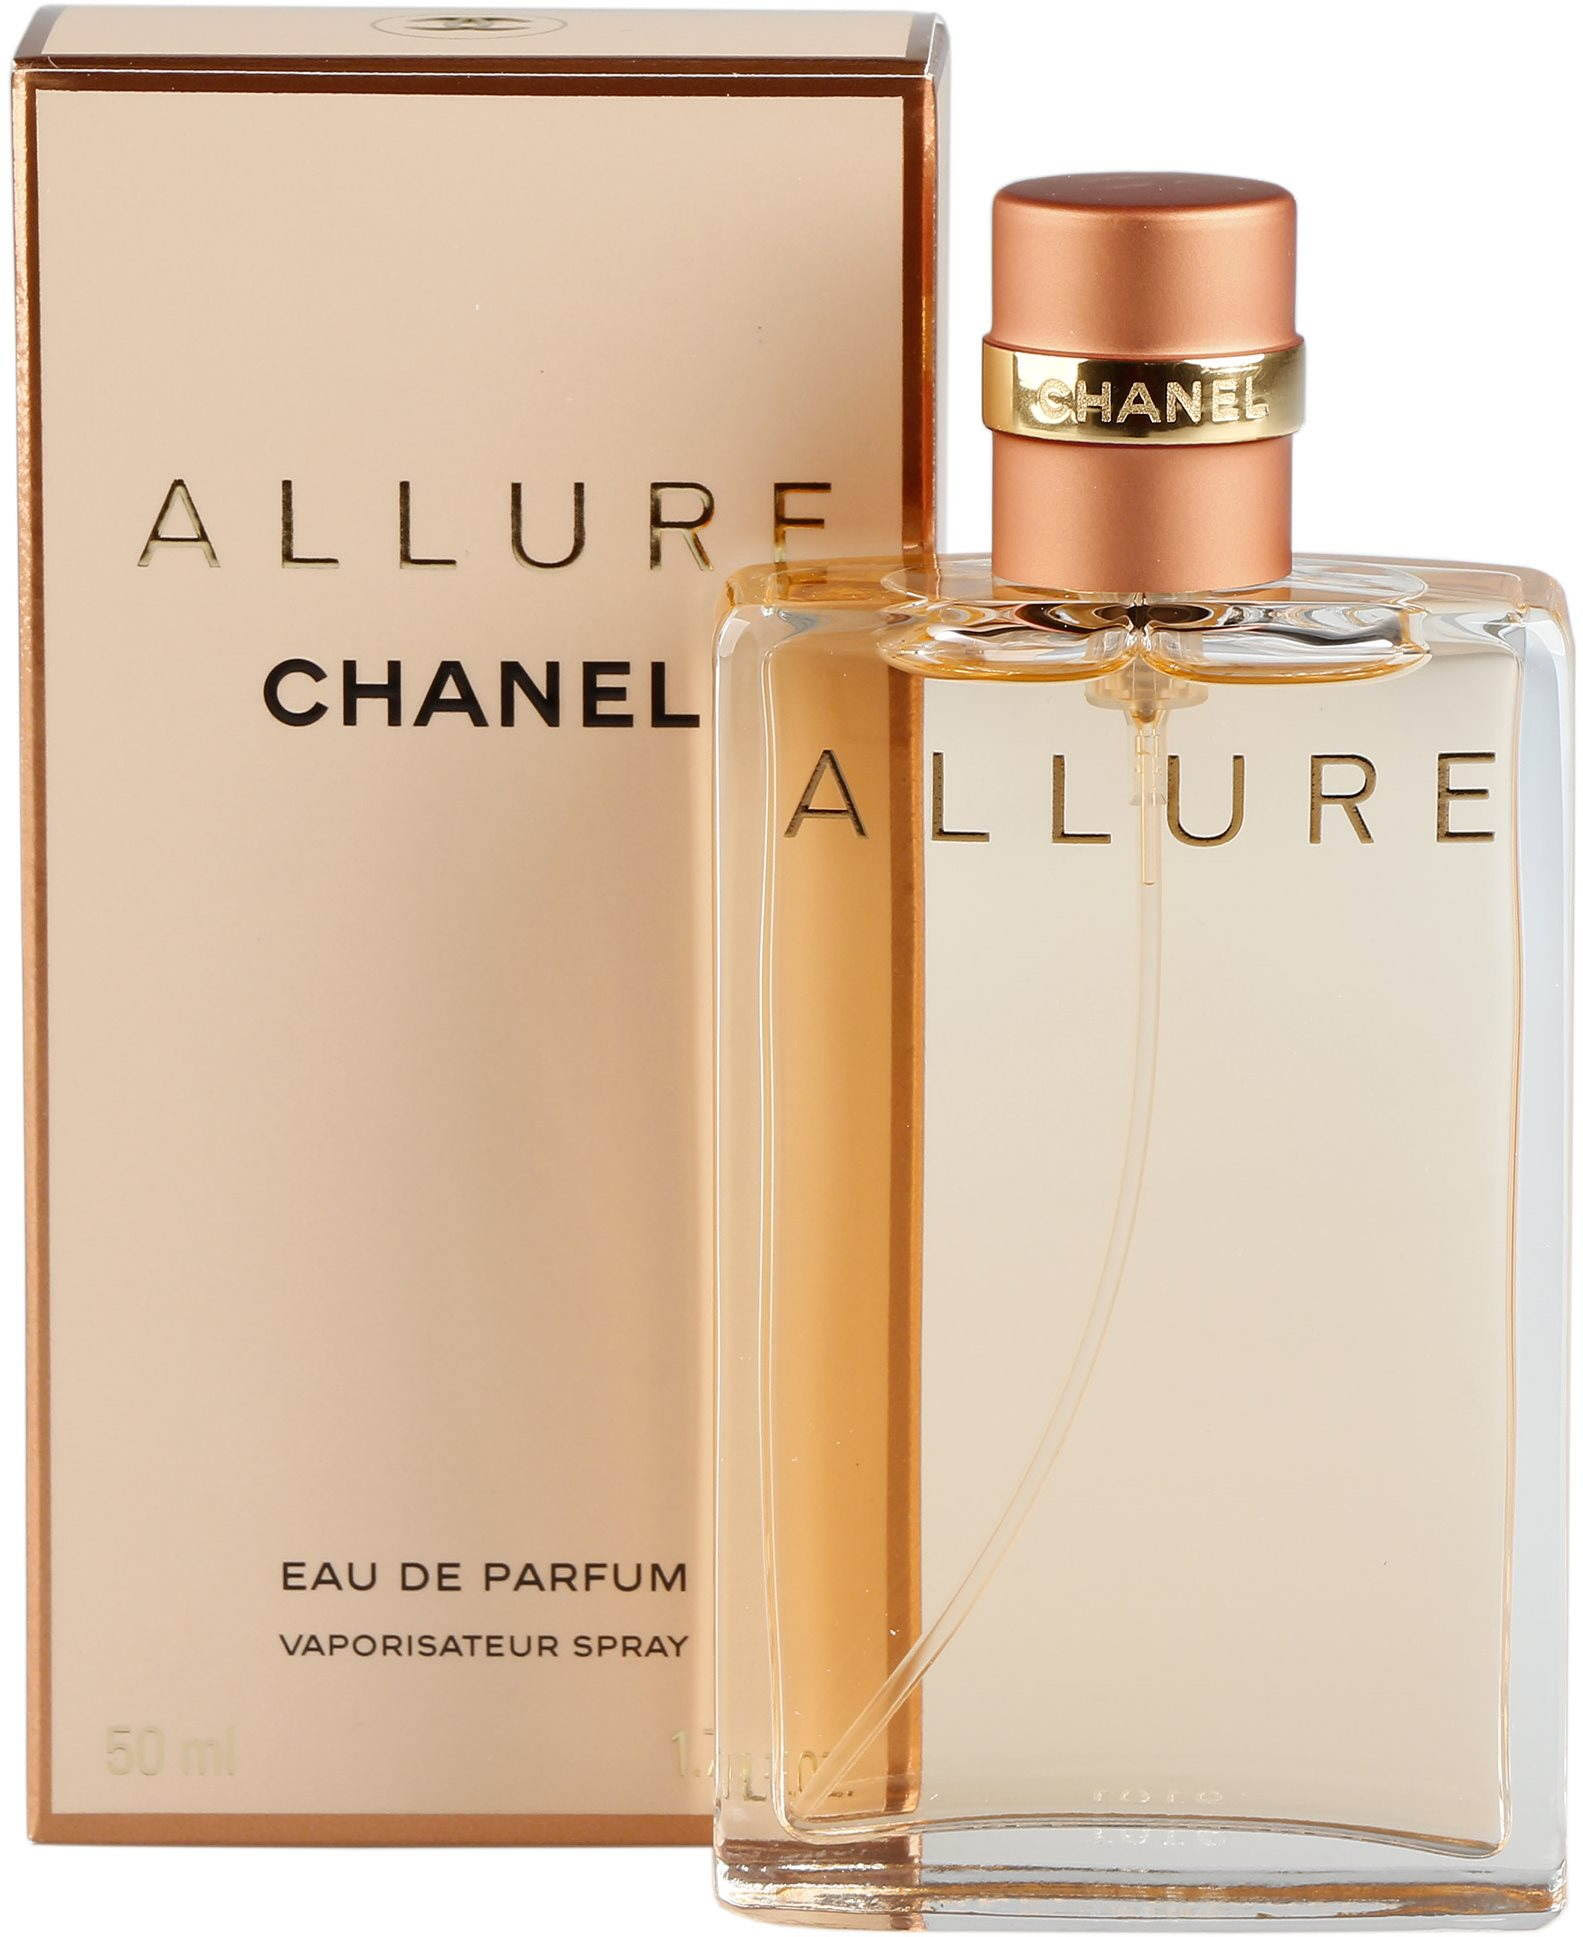 Chanel Allure for Women Eau de Parfum Spray - 50ml